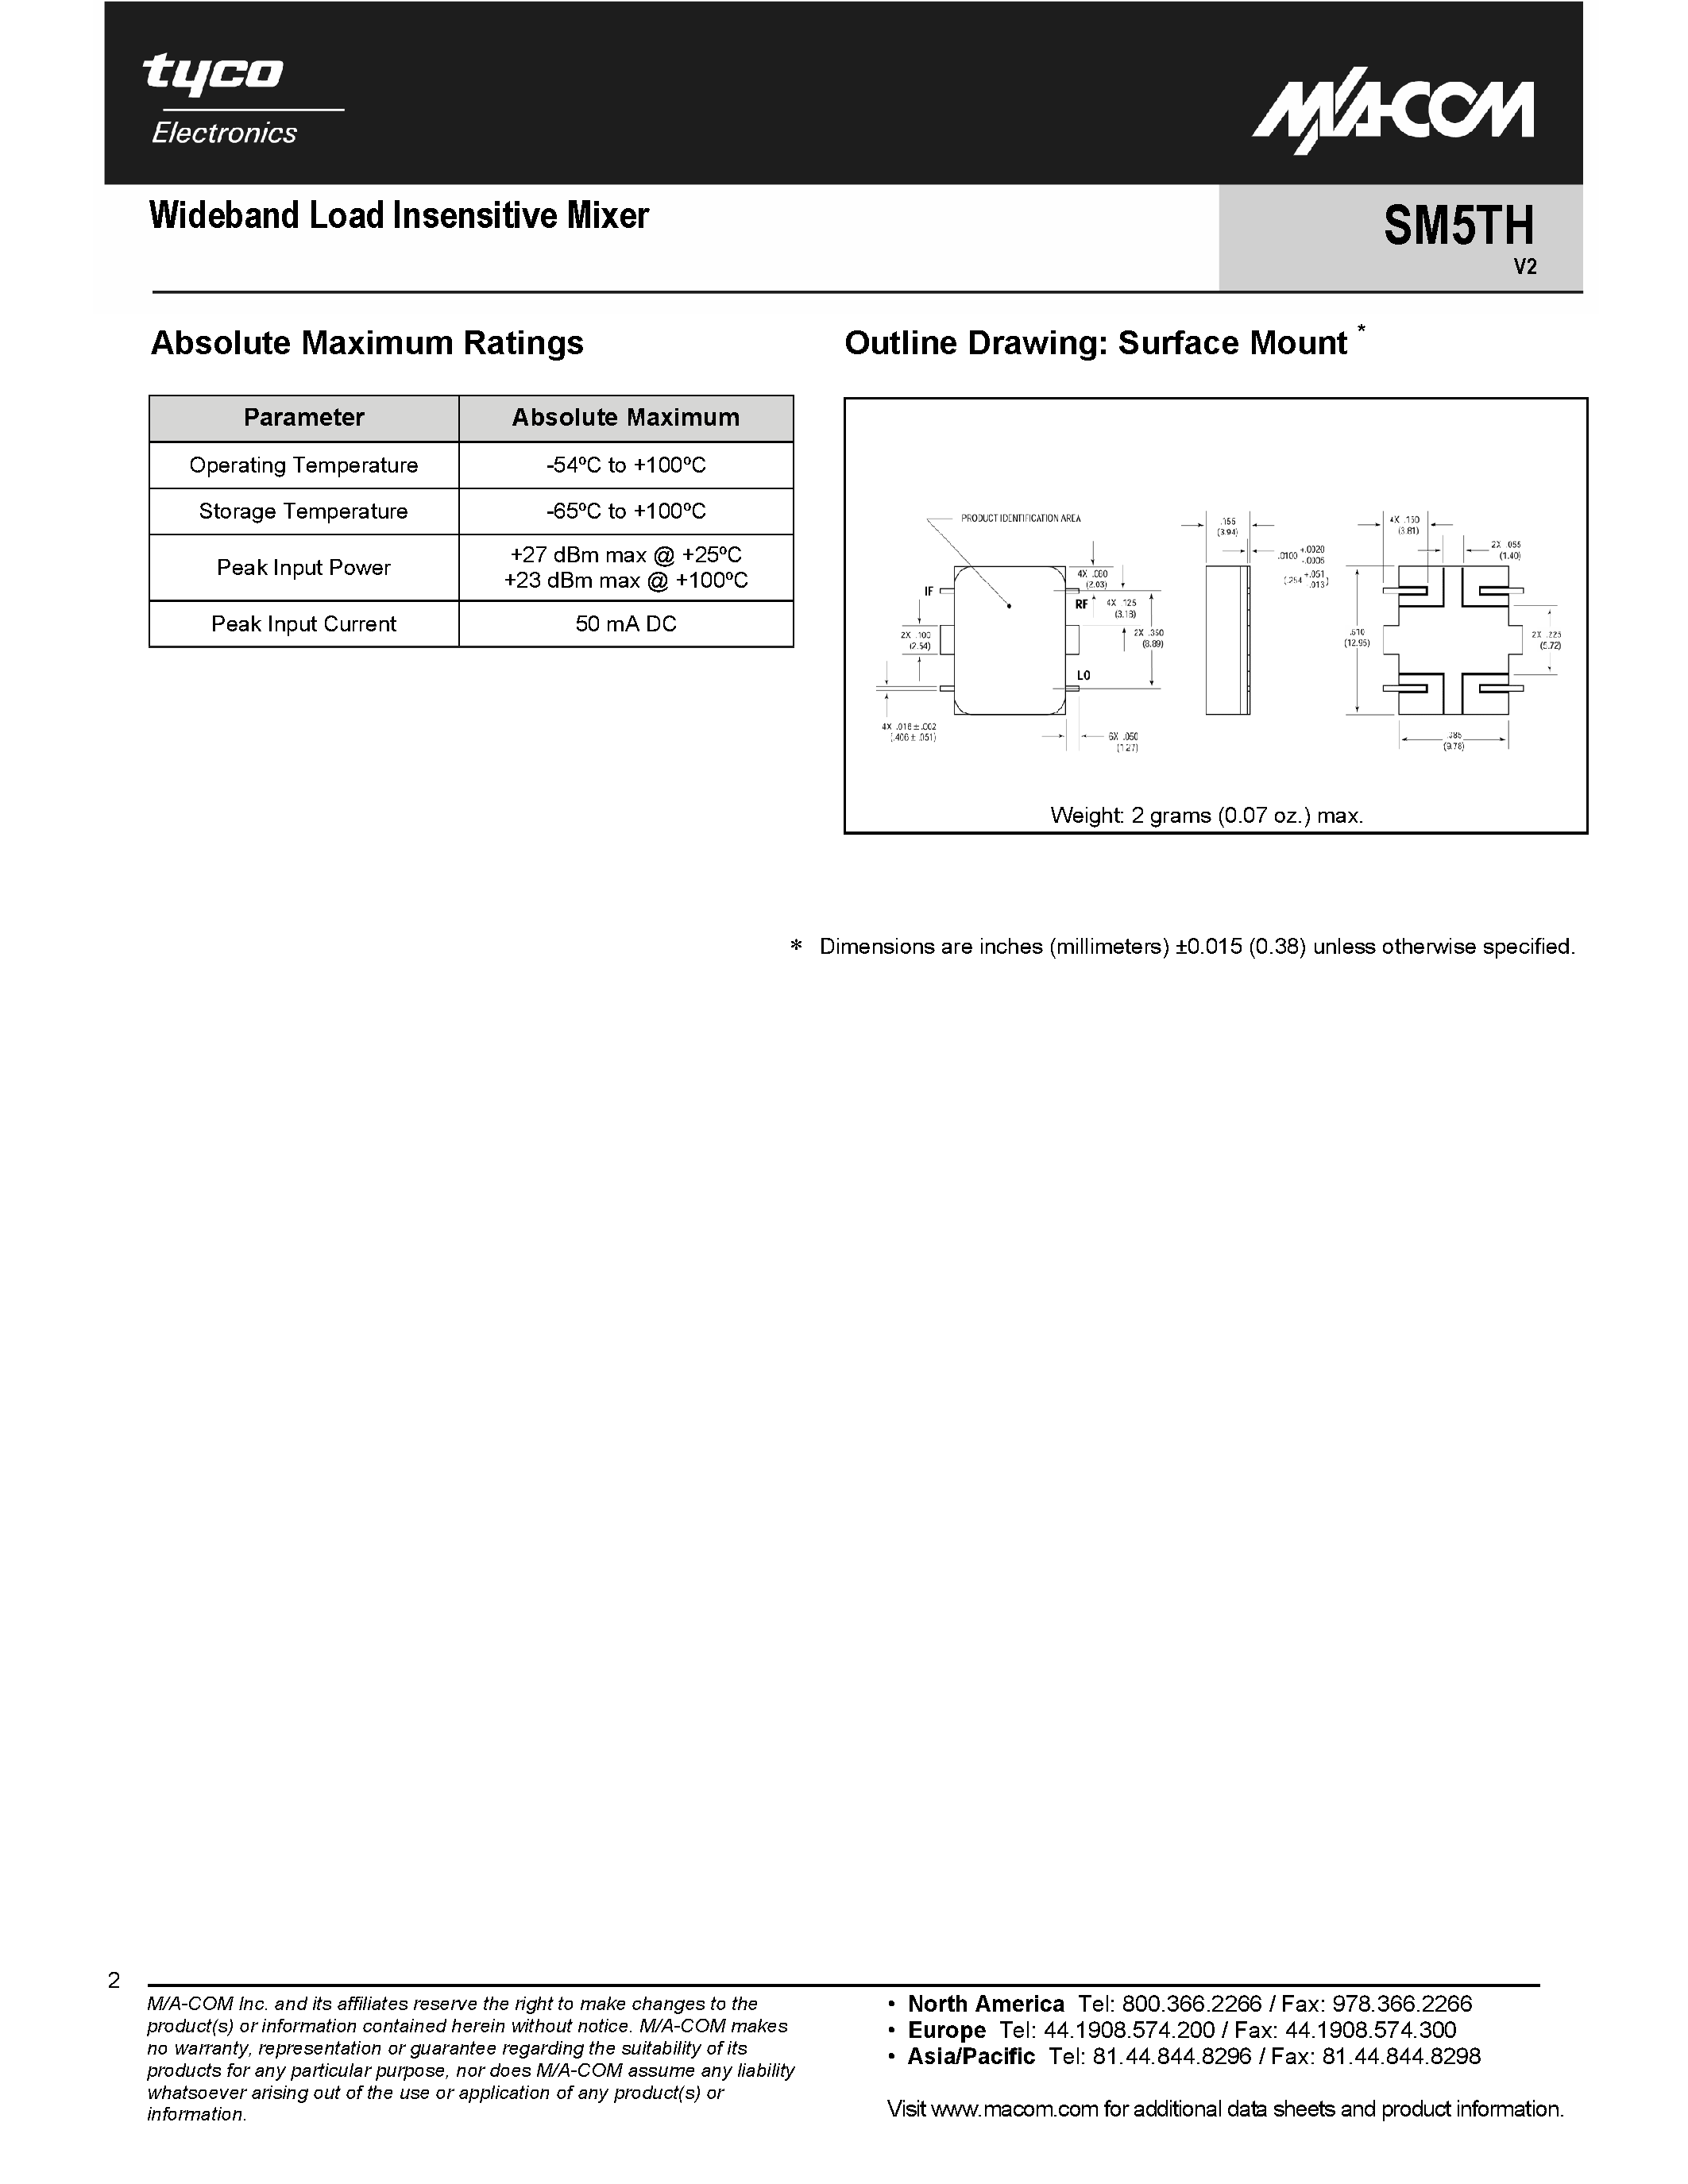 Datasheet SM5TH - Wideband Load Insensitive Mixer page 2